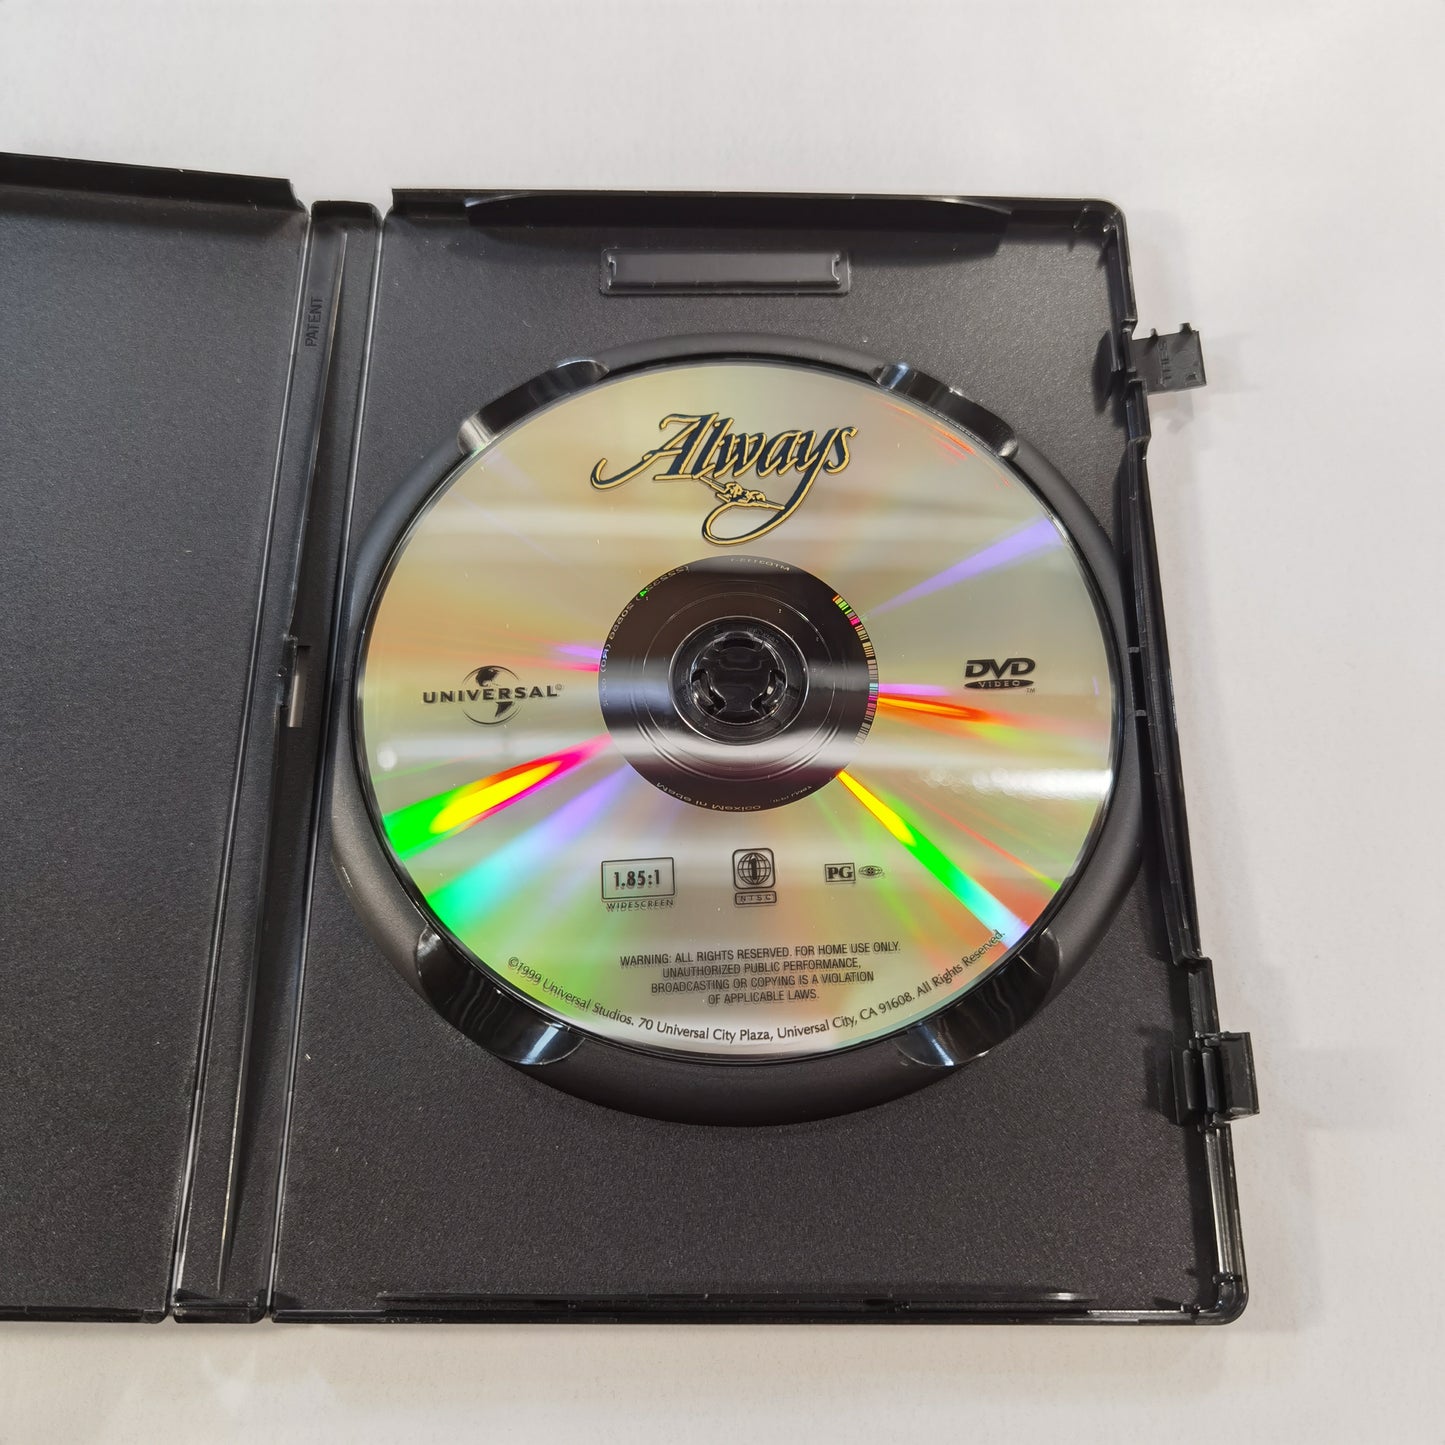 Always (1989) - DVD US 1999